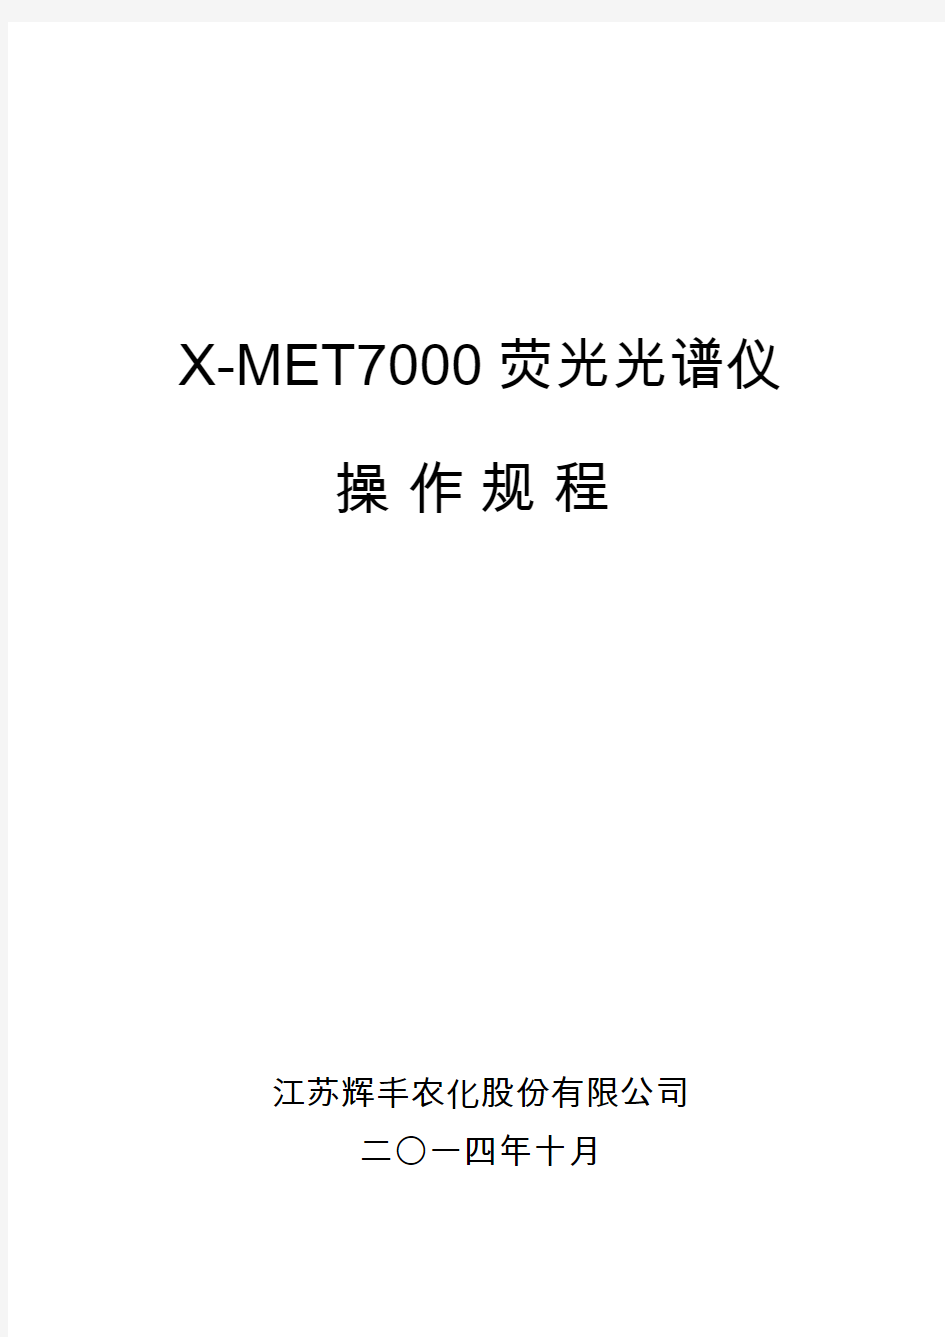 X-MET7000荧光光谱仪操作规程